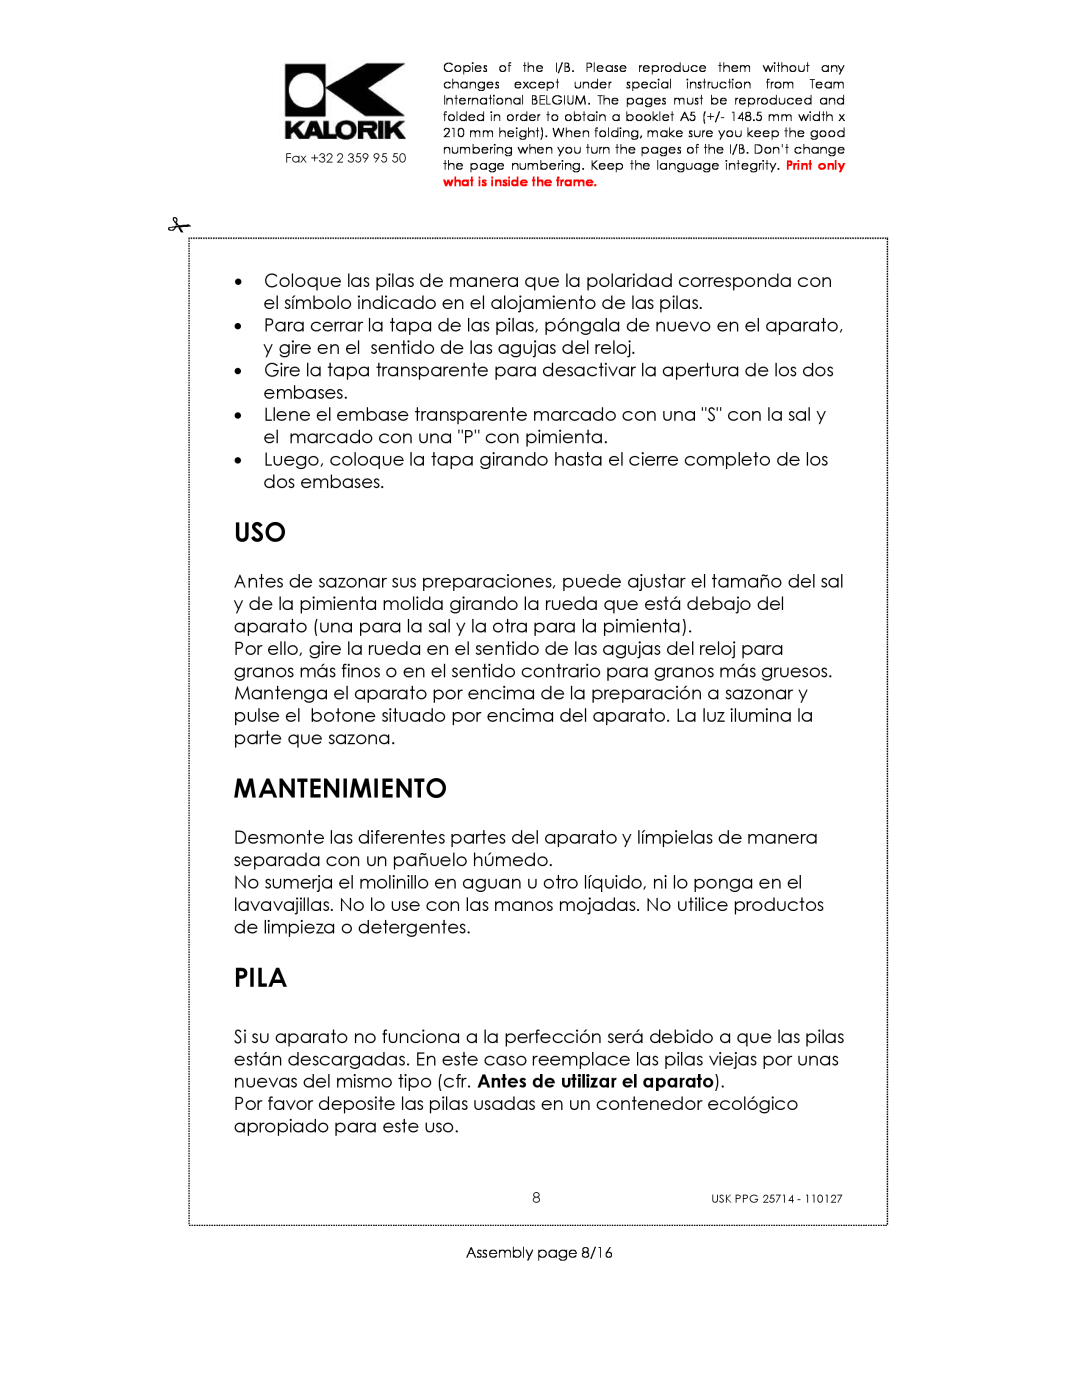 Kalorik USK PPG 25714 manual Mantenimiento, Pila, Assembly page 8/16 